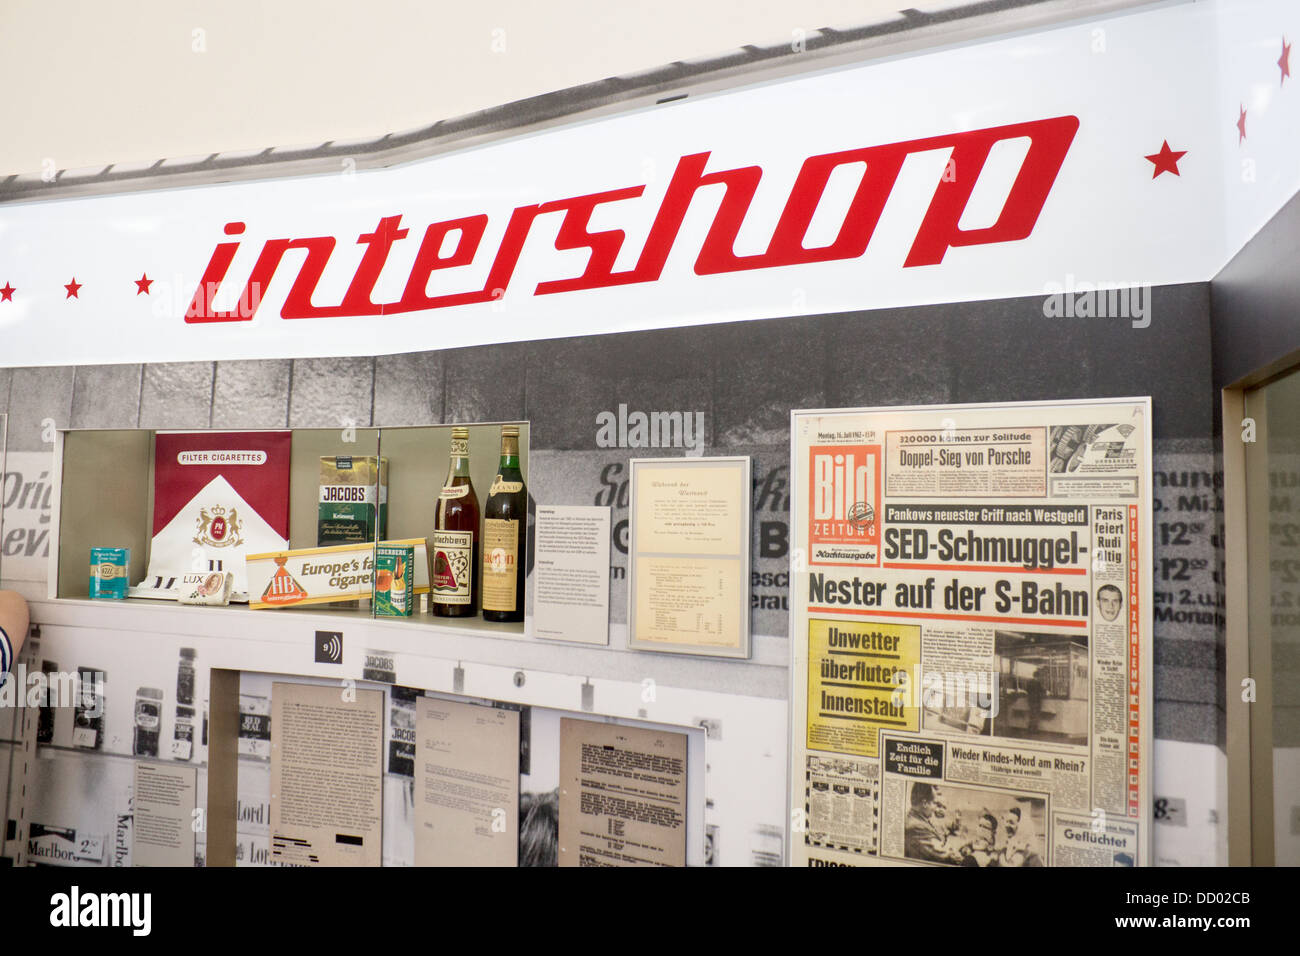 Intershop GDR era luxury goods shop display in Tränenpalast Palace of Tears exhibition Berlin Germany Stock Photo